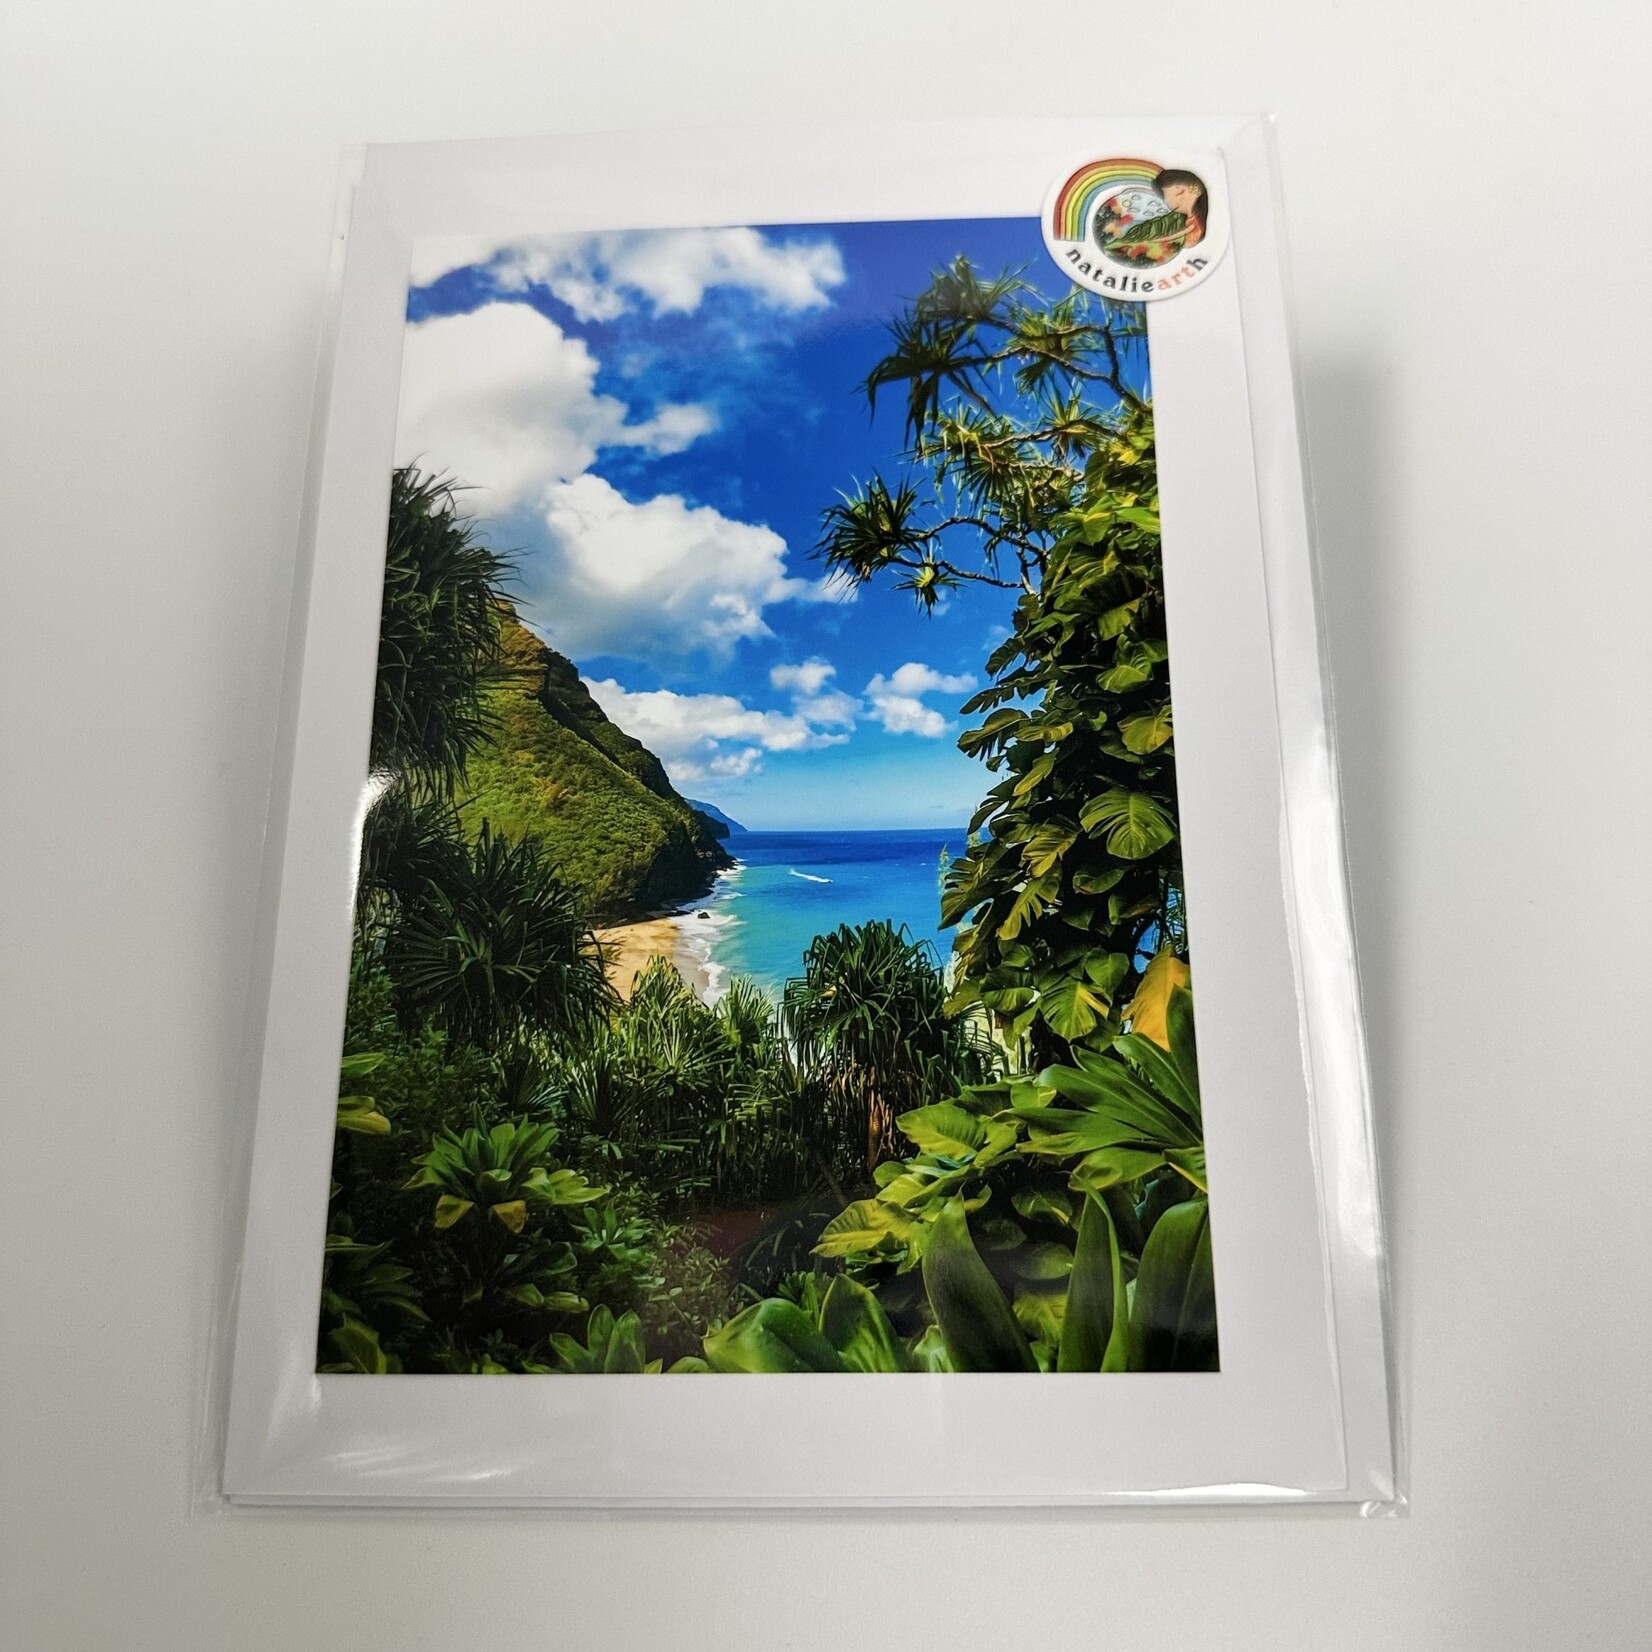 Natalie Earth LLC Mauka and Makai - Frame-able Greeting Card 5” x 7”